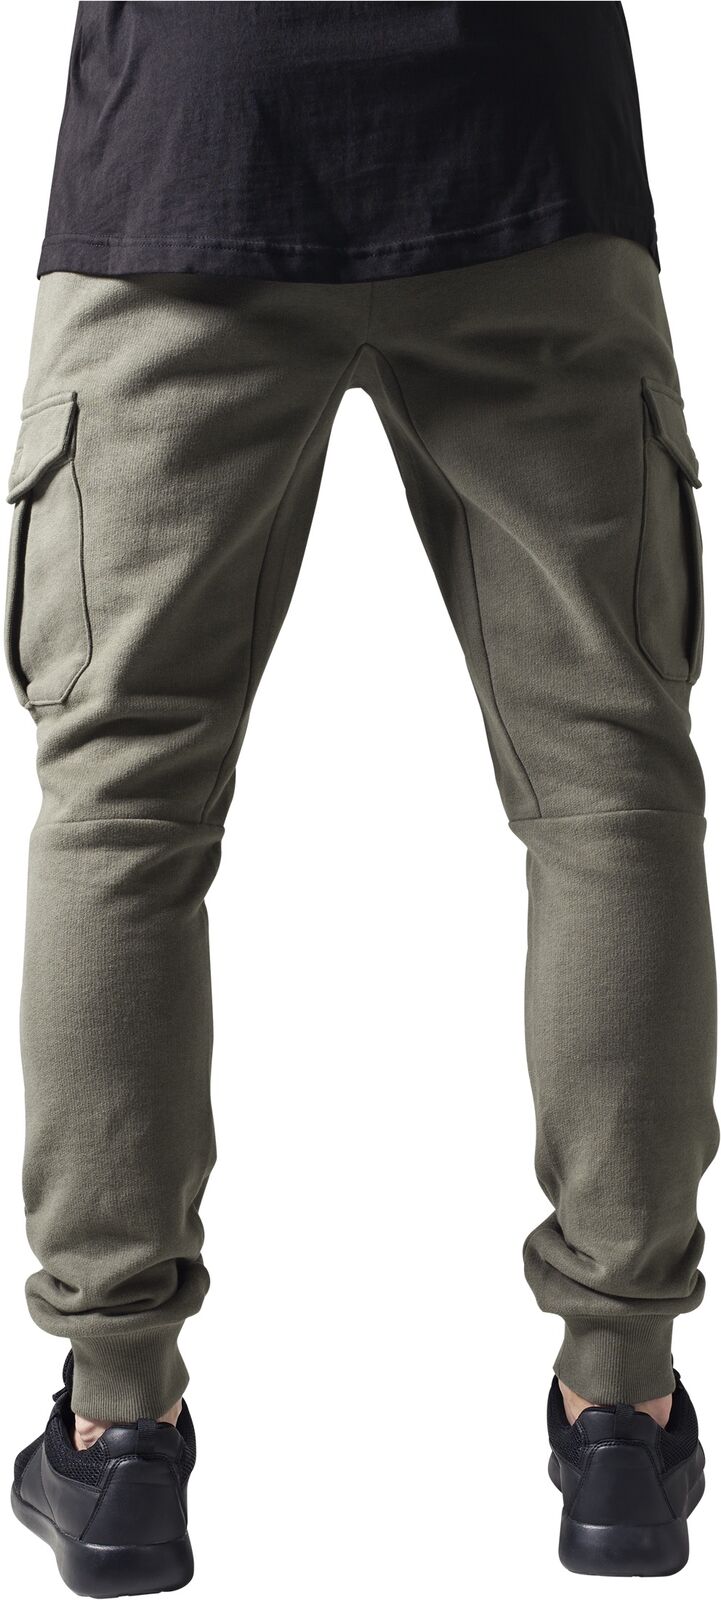 Cargo Sweatpants Urban Fitted | eBay Sweatpants Classics Olive